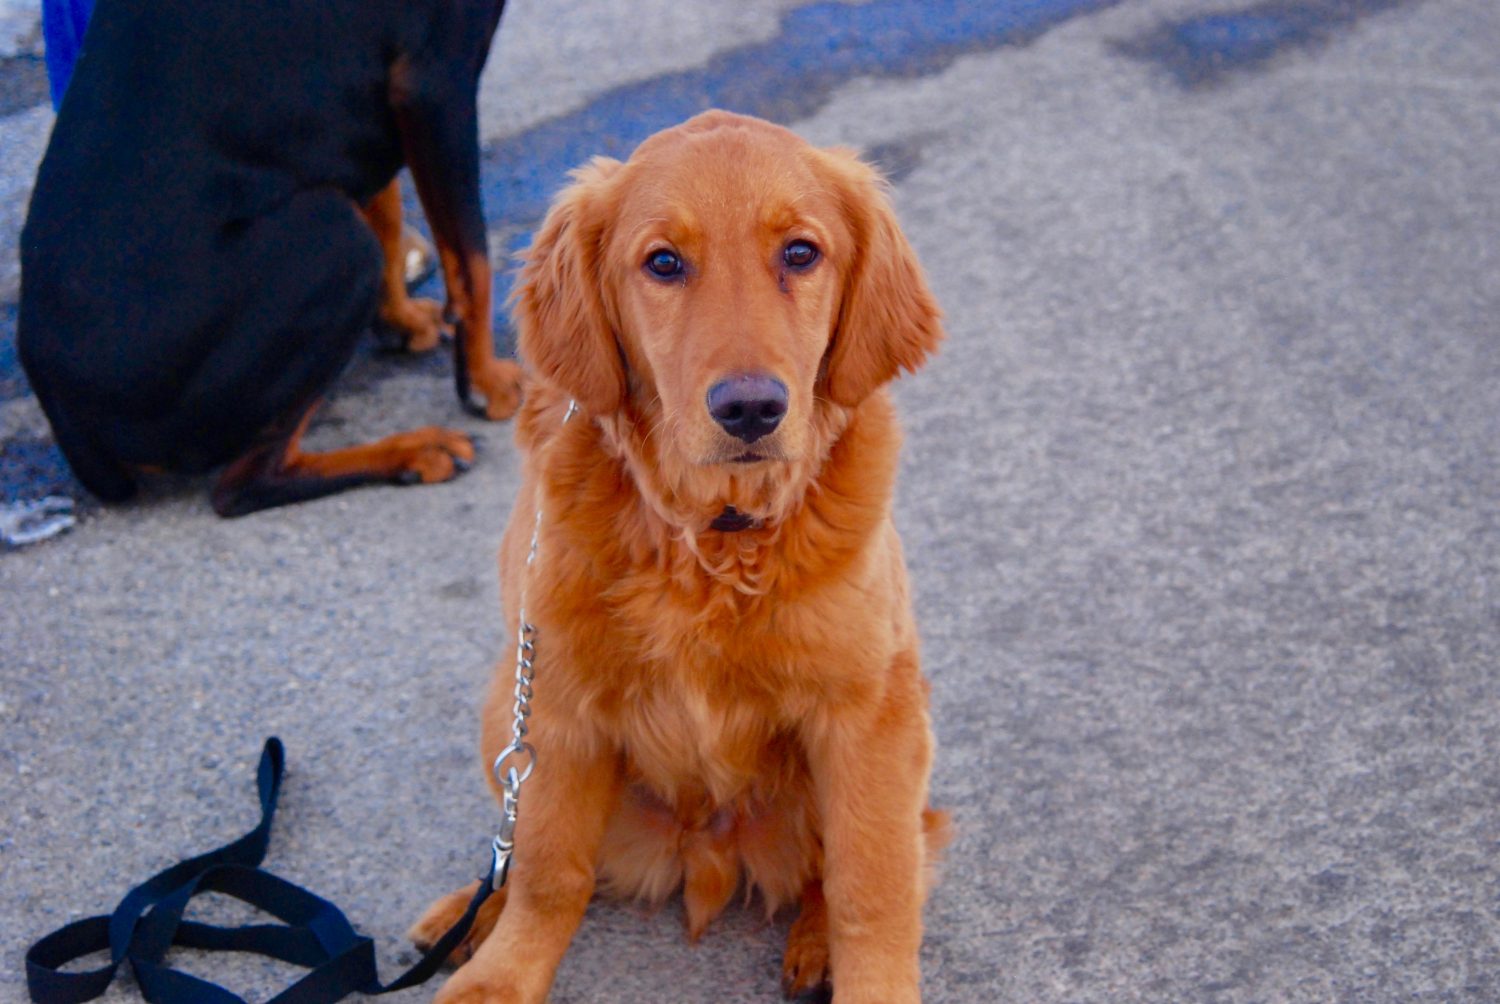 Front view of a golden retriever puppy.